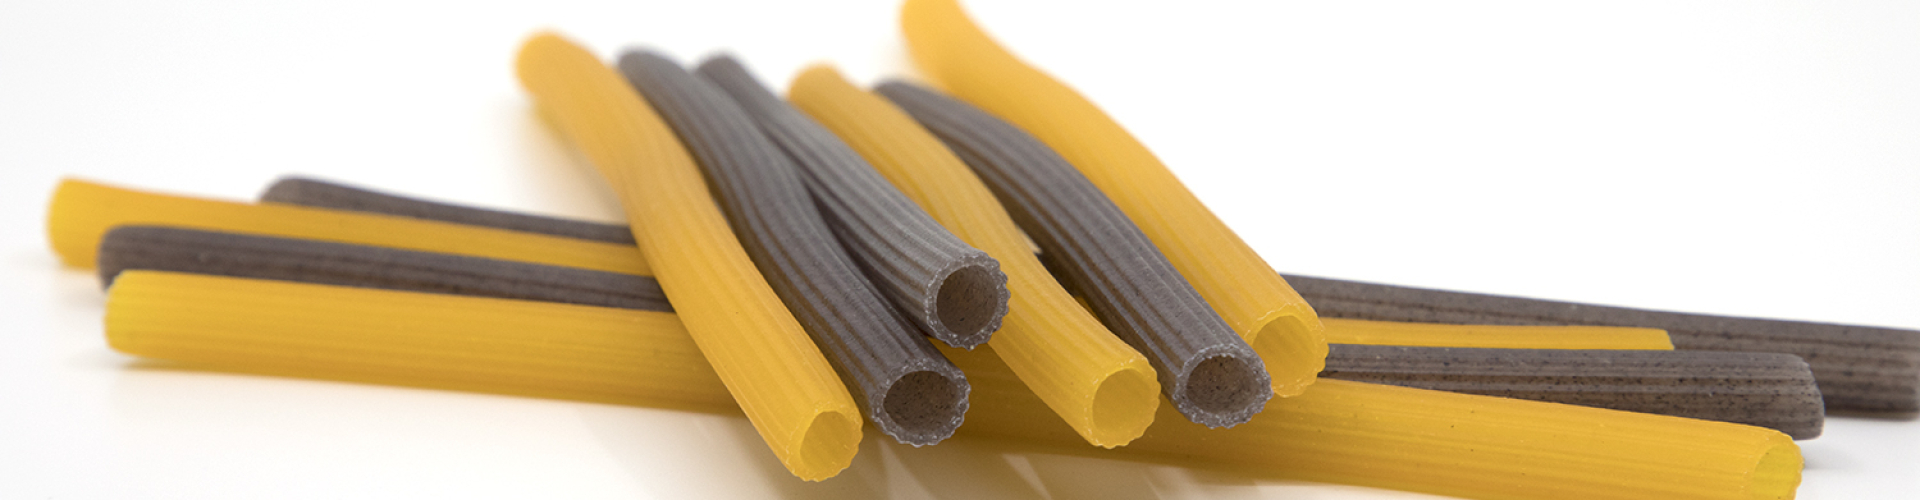 Plastic-free and eco friendly pasta straws